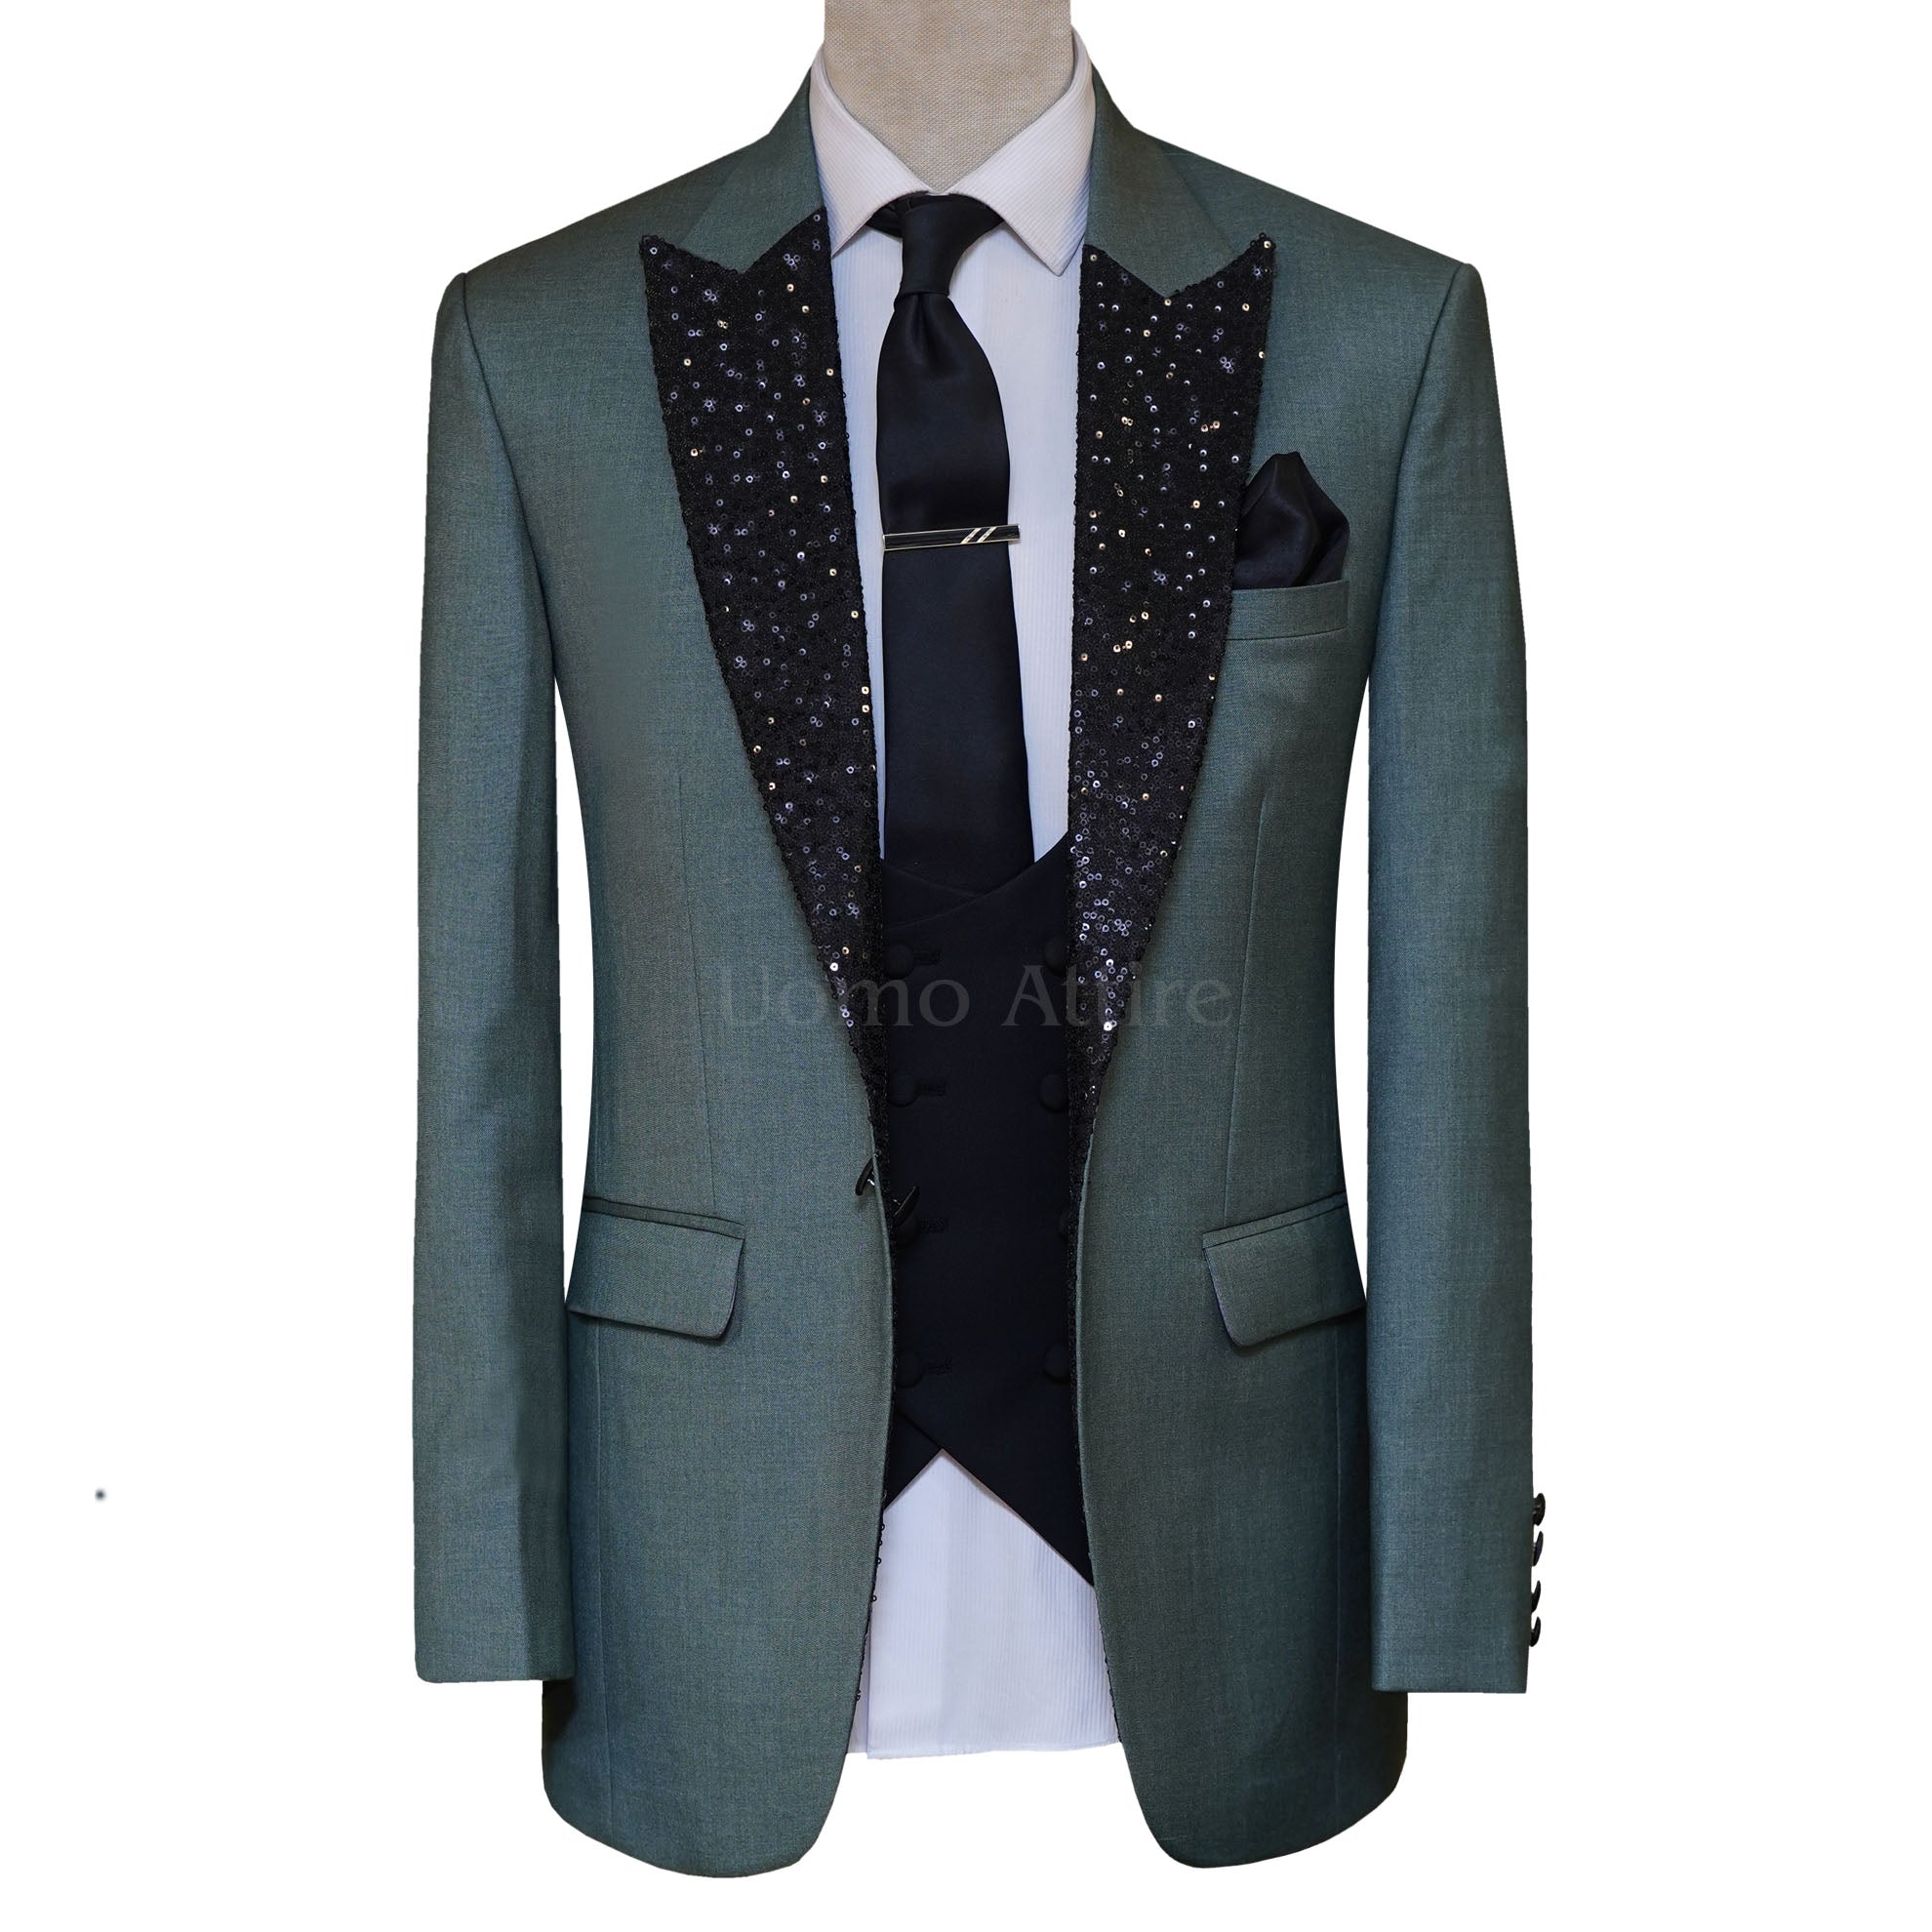 Sage Green Groom Tuxedo Suit for Wedding with Black Sequin Peak Lapel